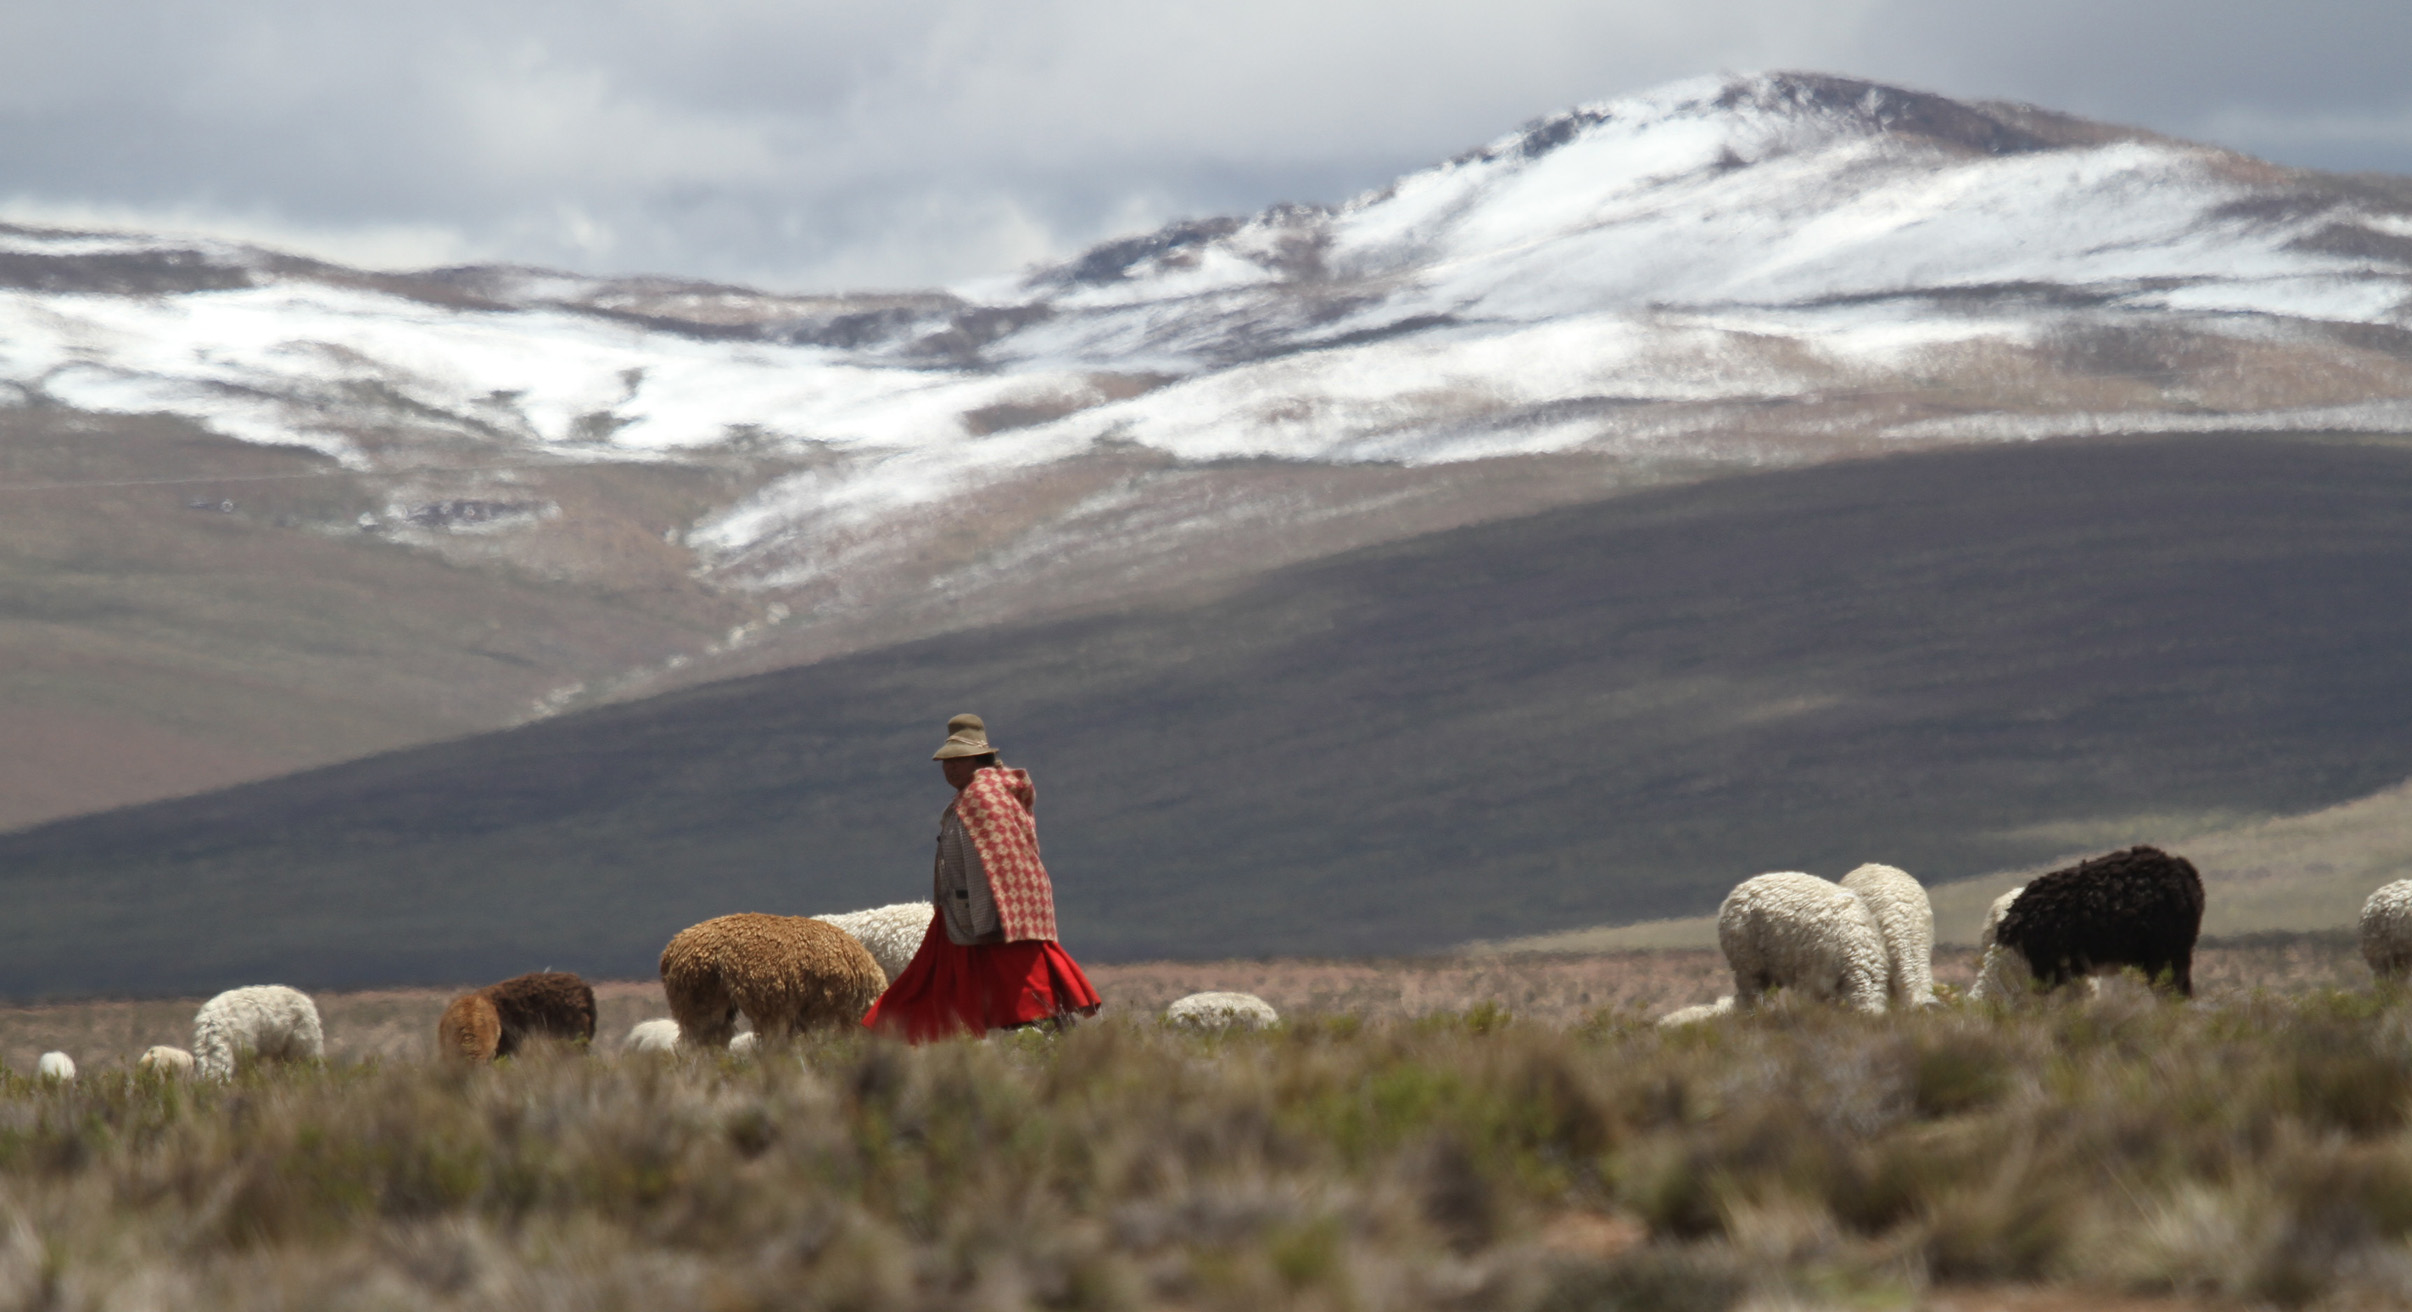 Peru Colca Canyon local herder with llamas